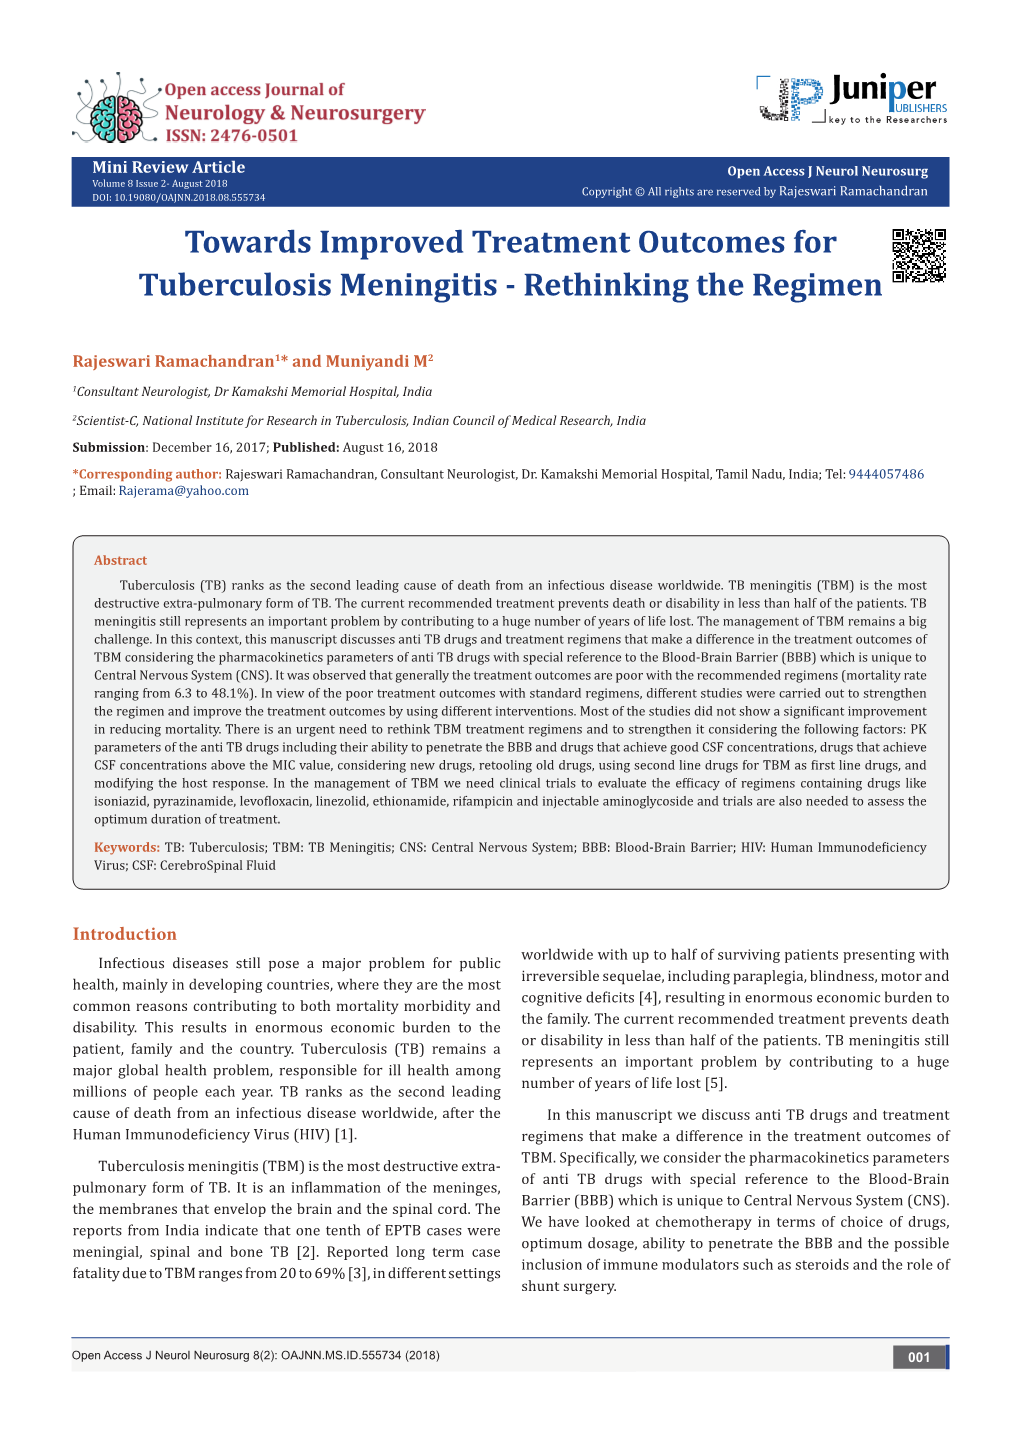 Towards Improved Treatment Outcomes for Tuberculosis Meningitis - Rethinking the Regimen